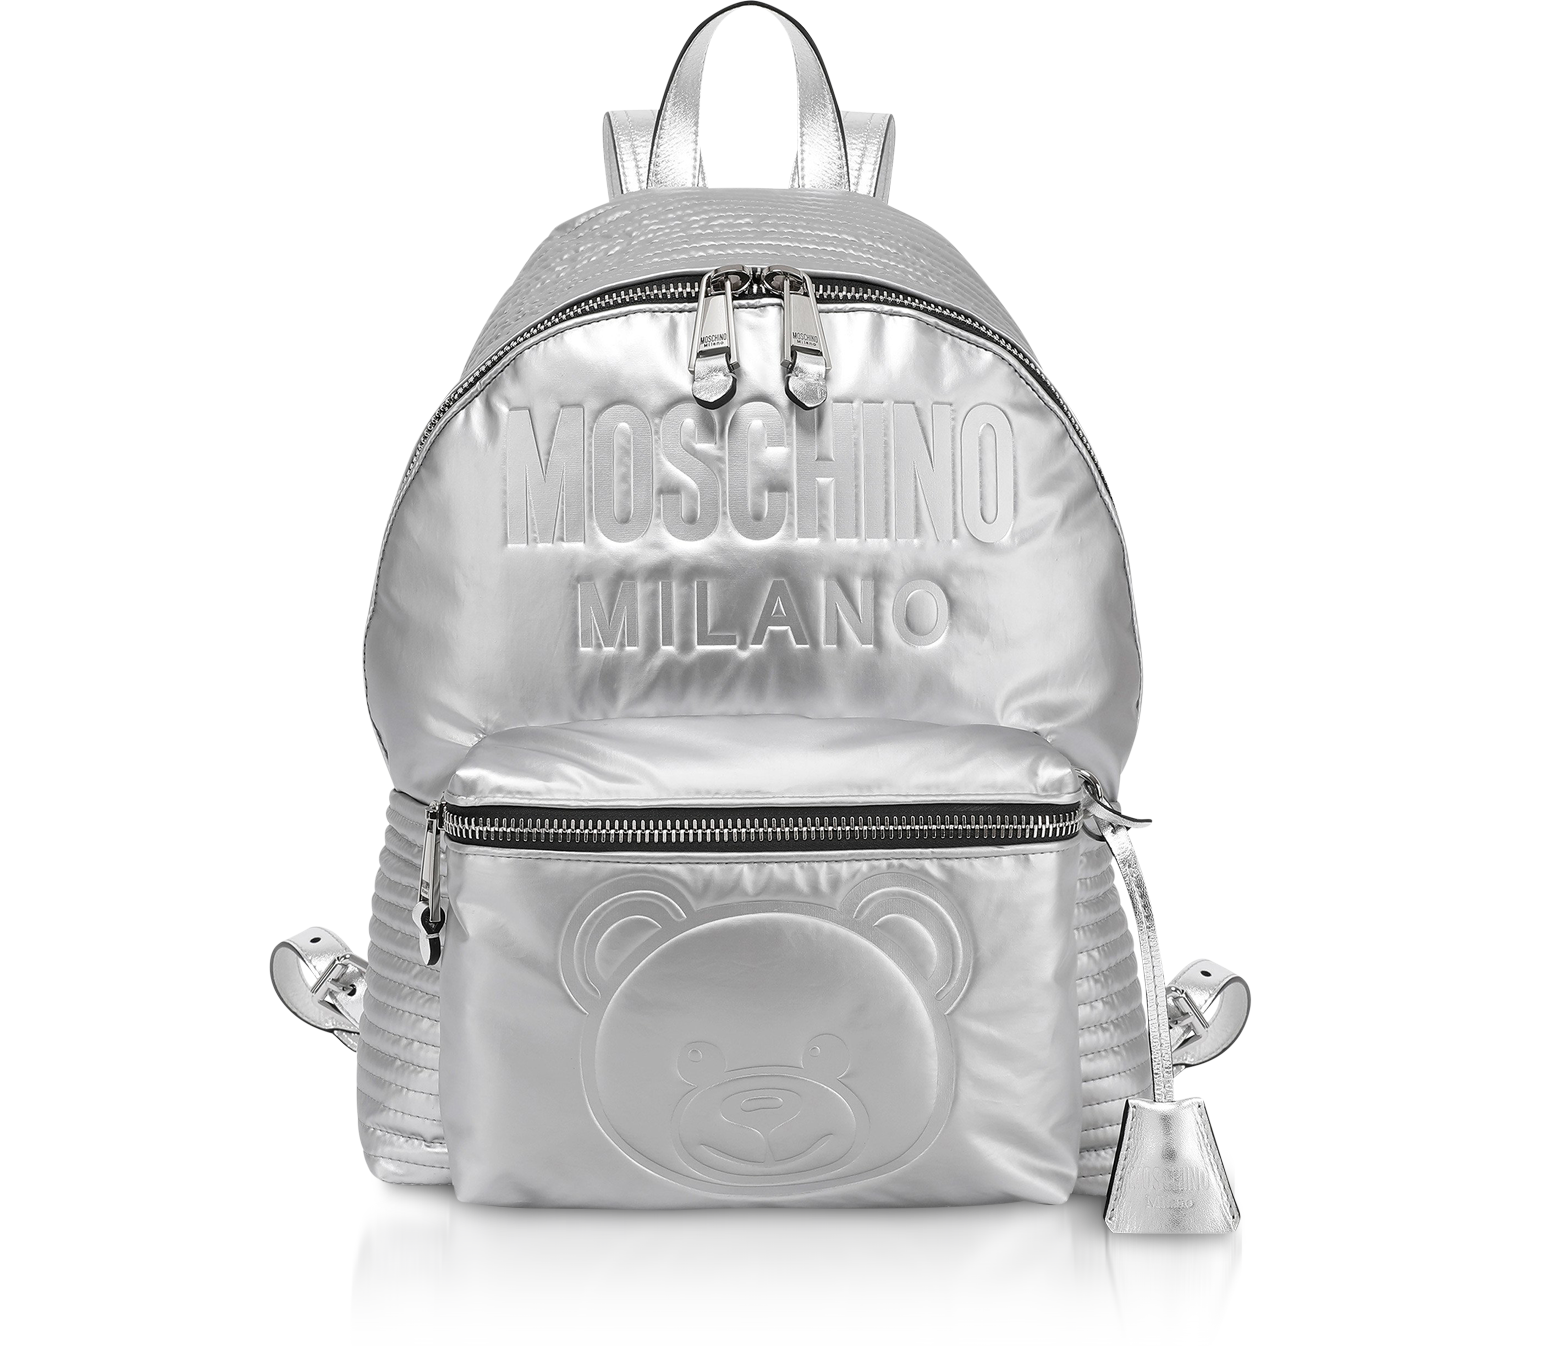 moschino backpack canada